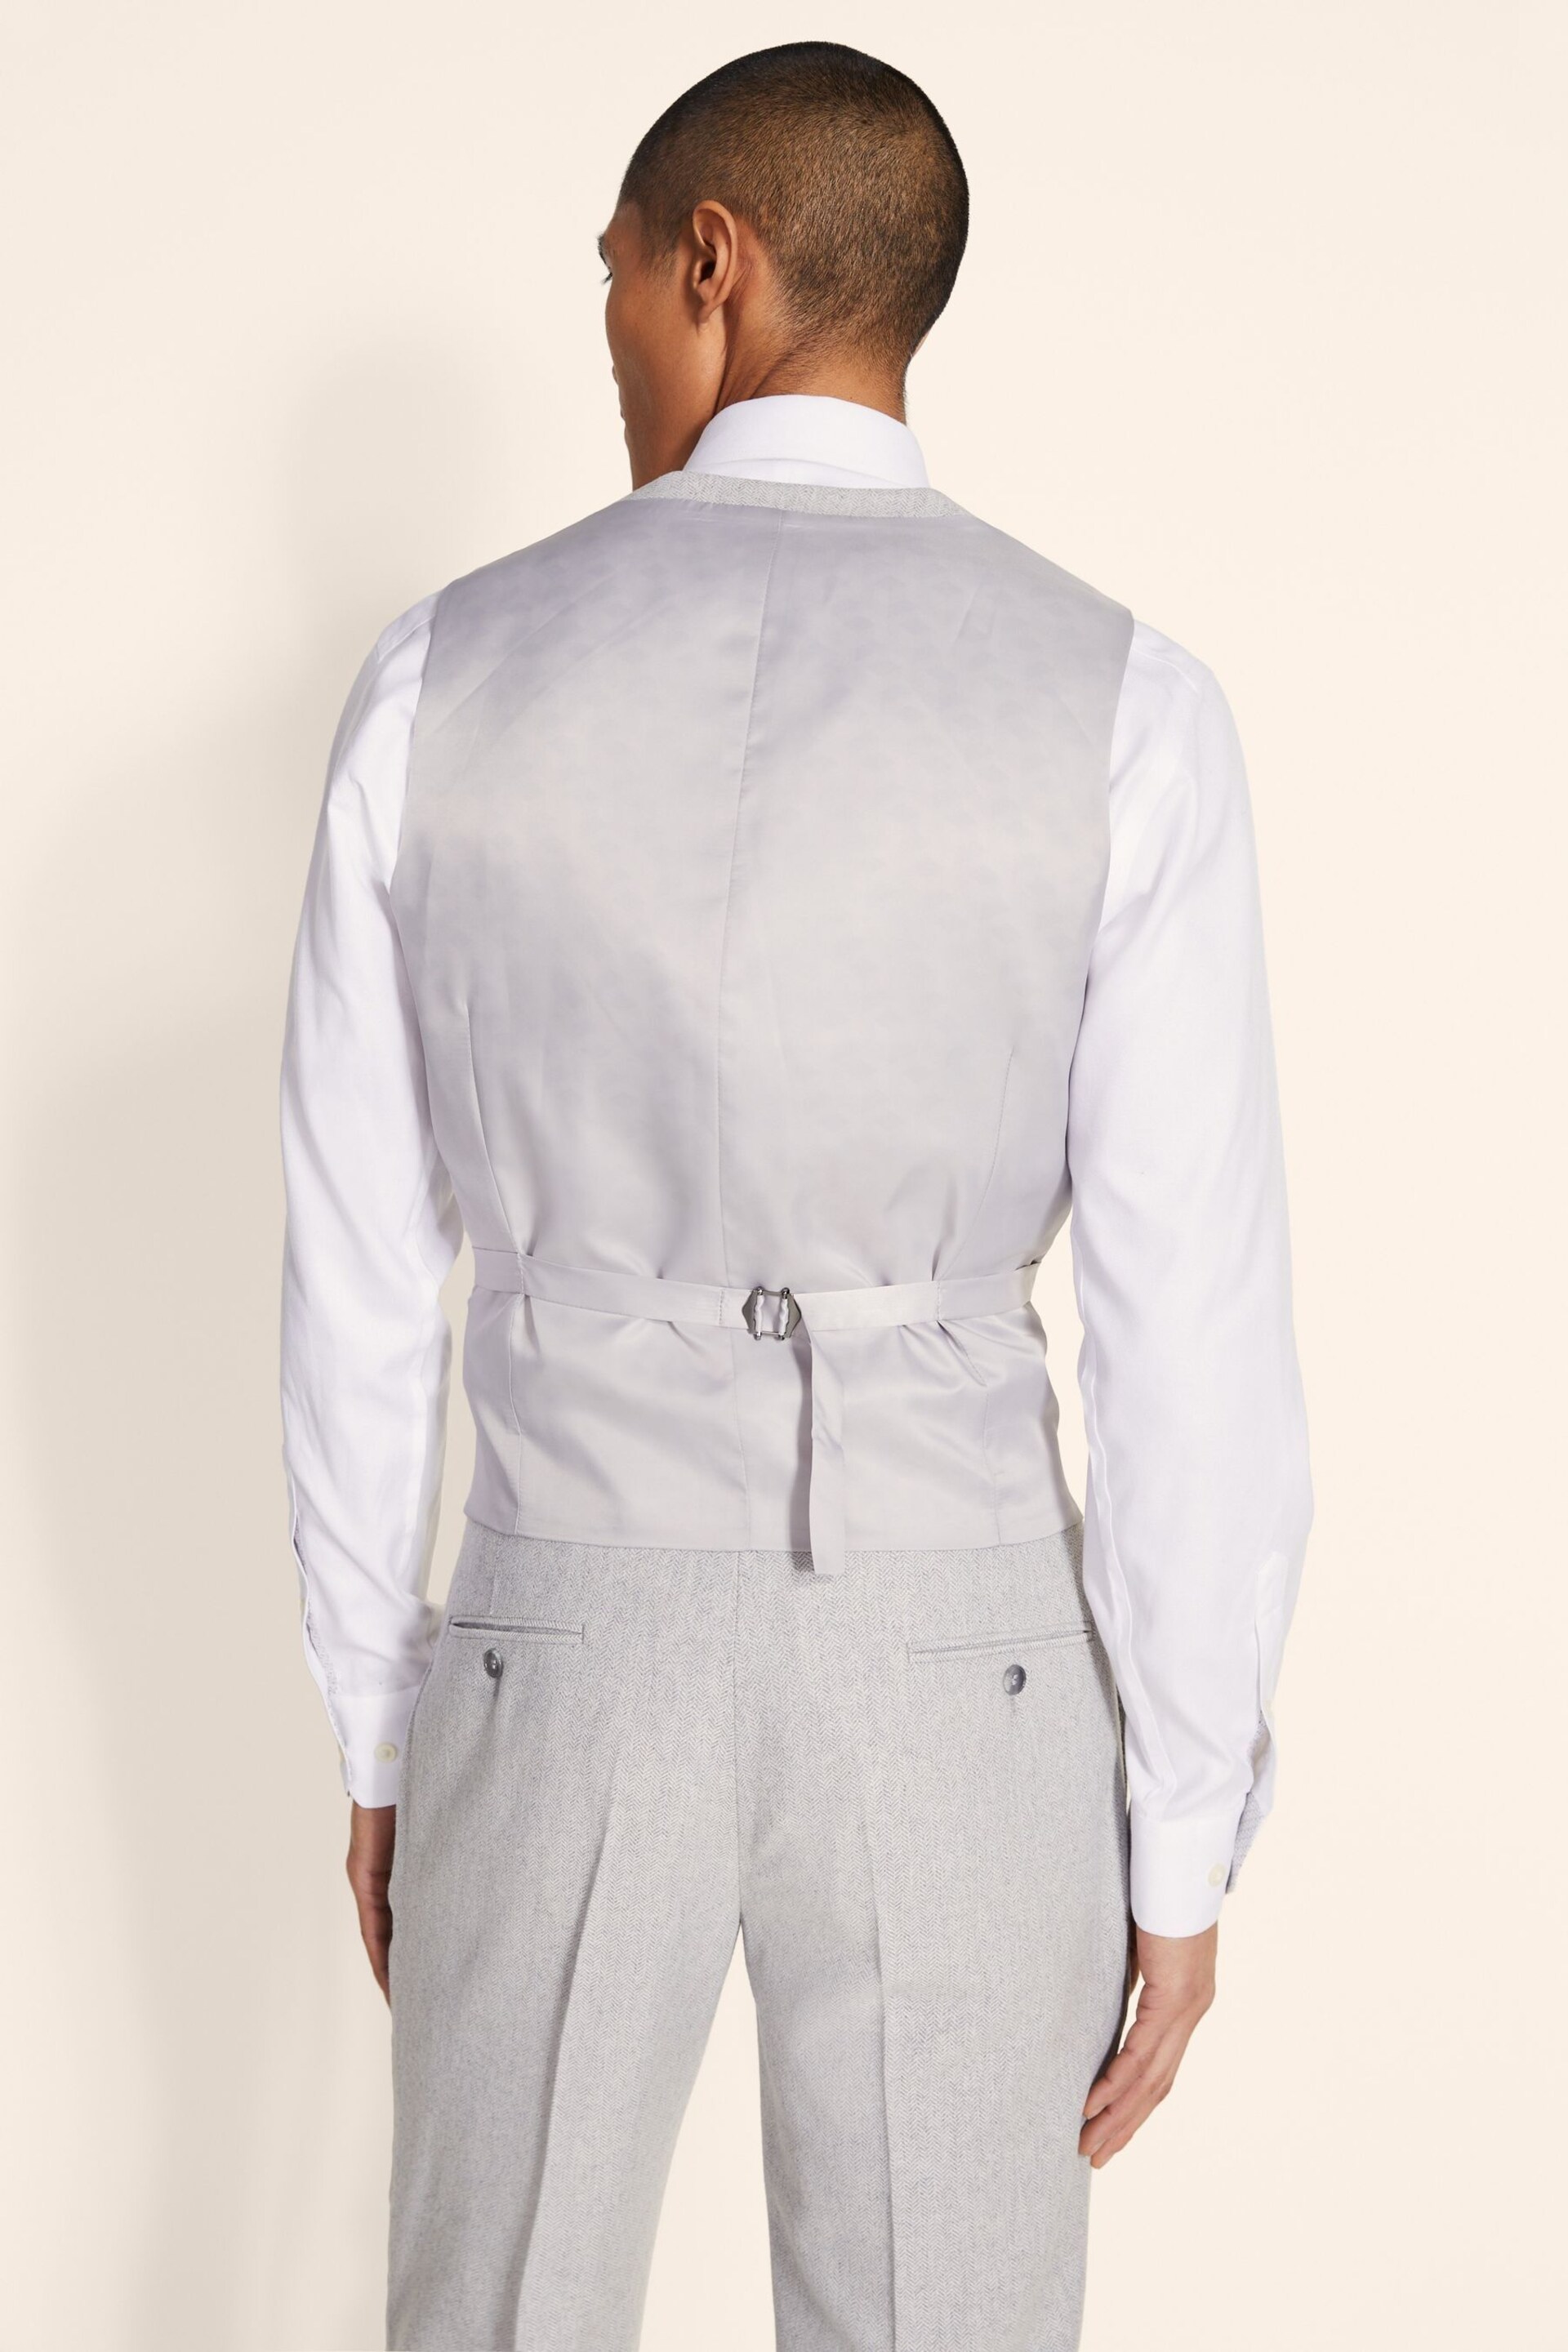 MOSS Tailored Fit Light Grey Herringbone Waistcoat - Image 2 of 2